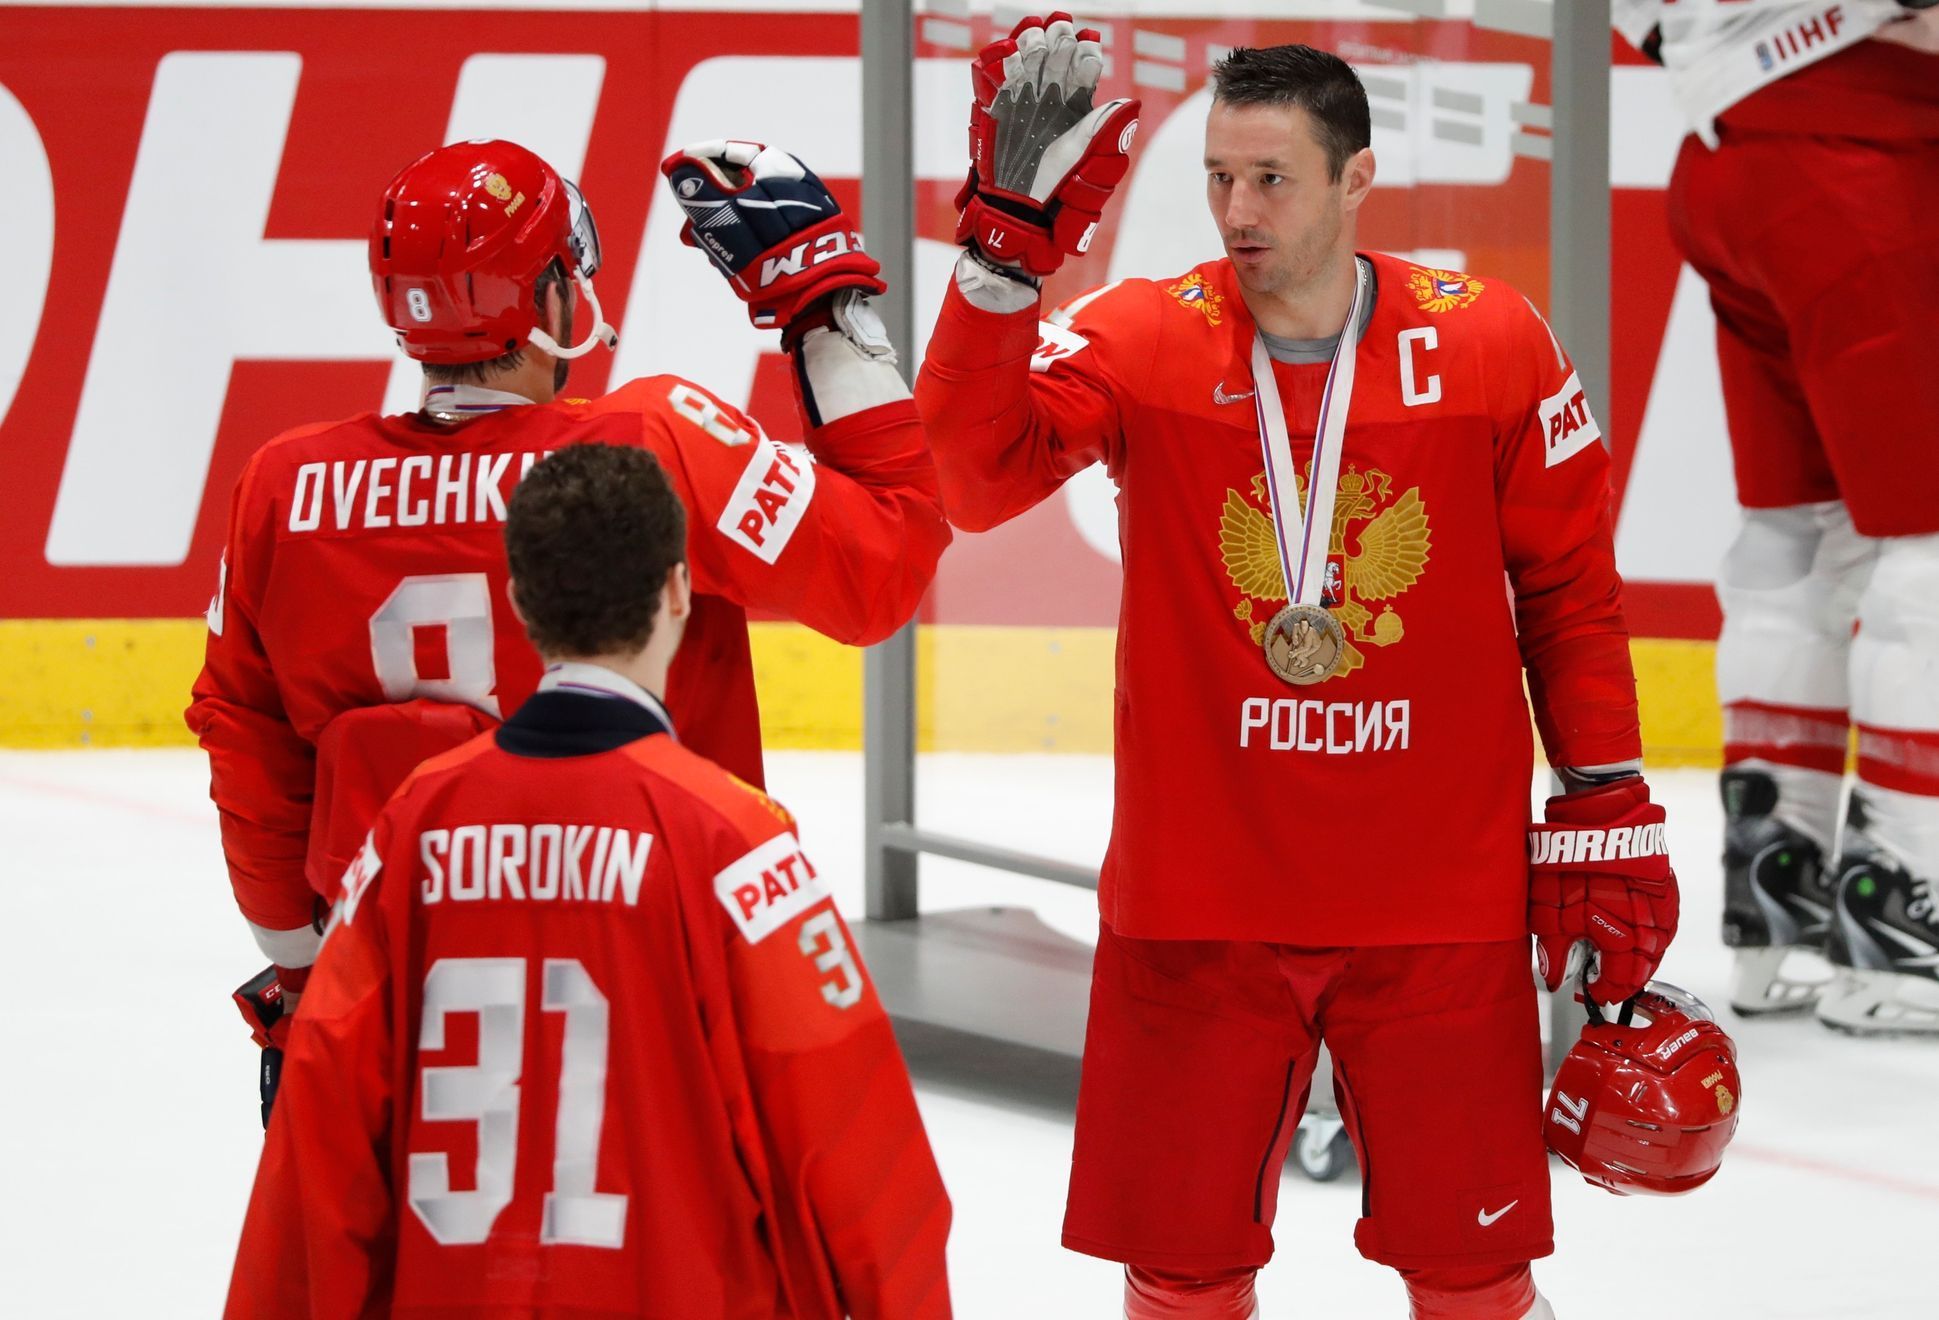 Česko - Rusko na MS v hokeji 2019, zápas o bronz: Ilja Kovalčuk a Alexnadr Ovečkin